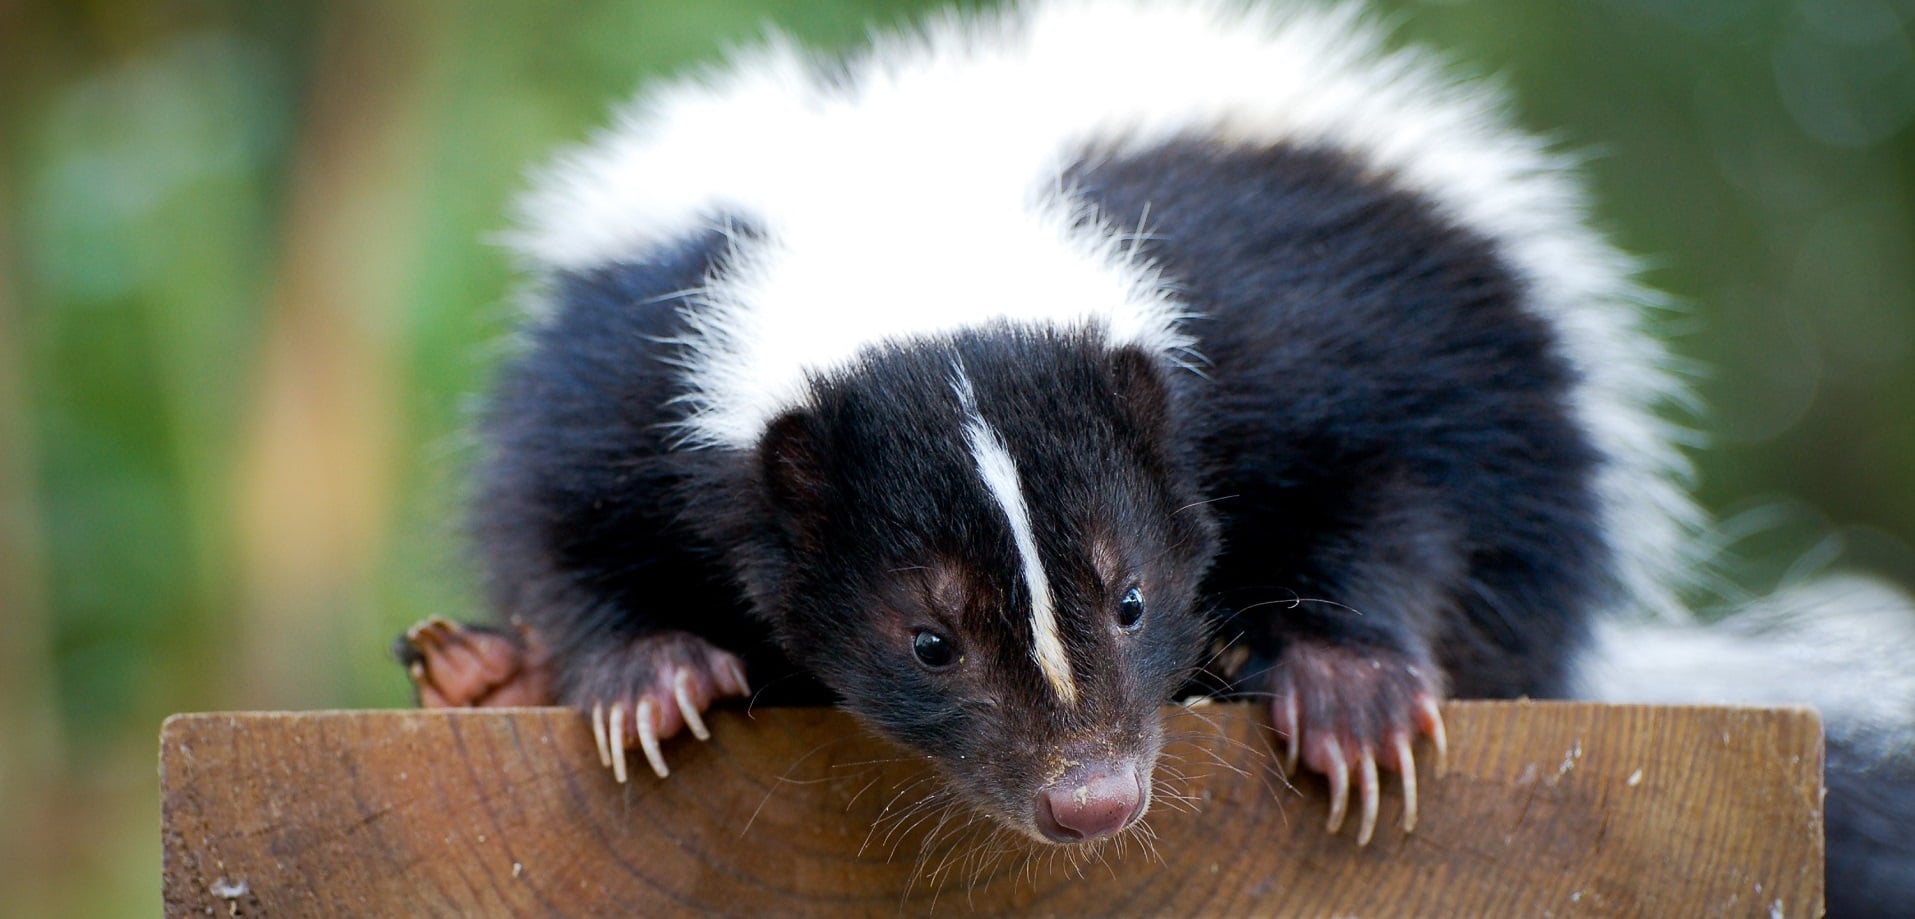 skunk removal ottawa